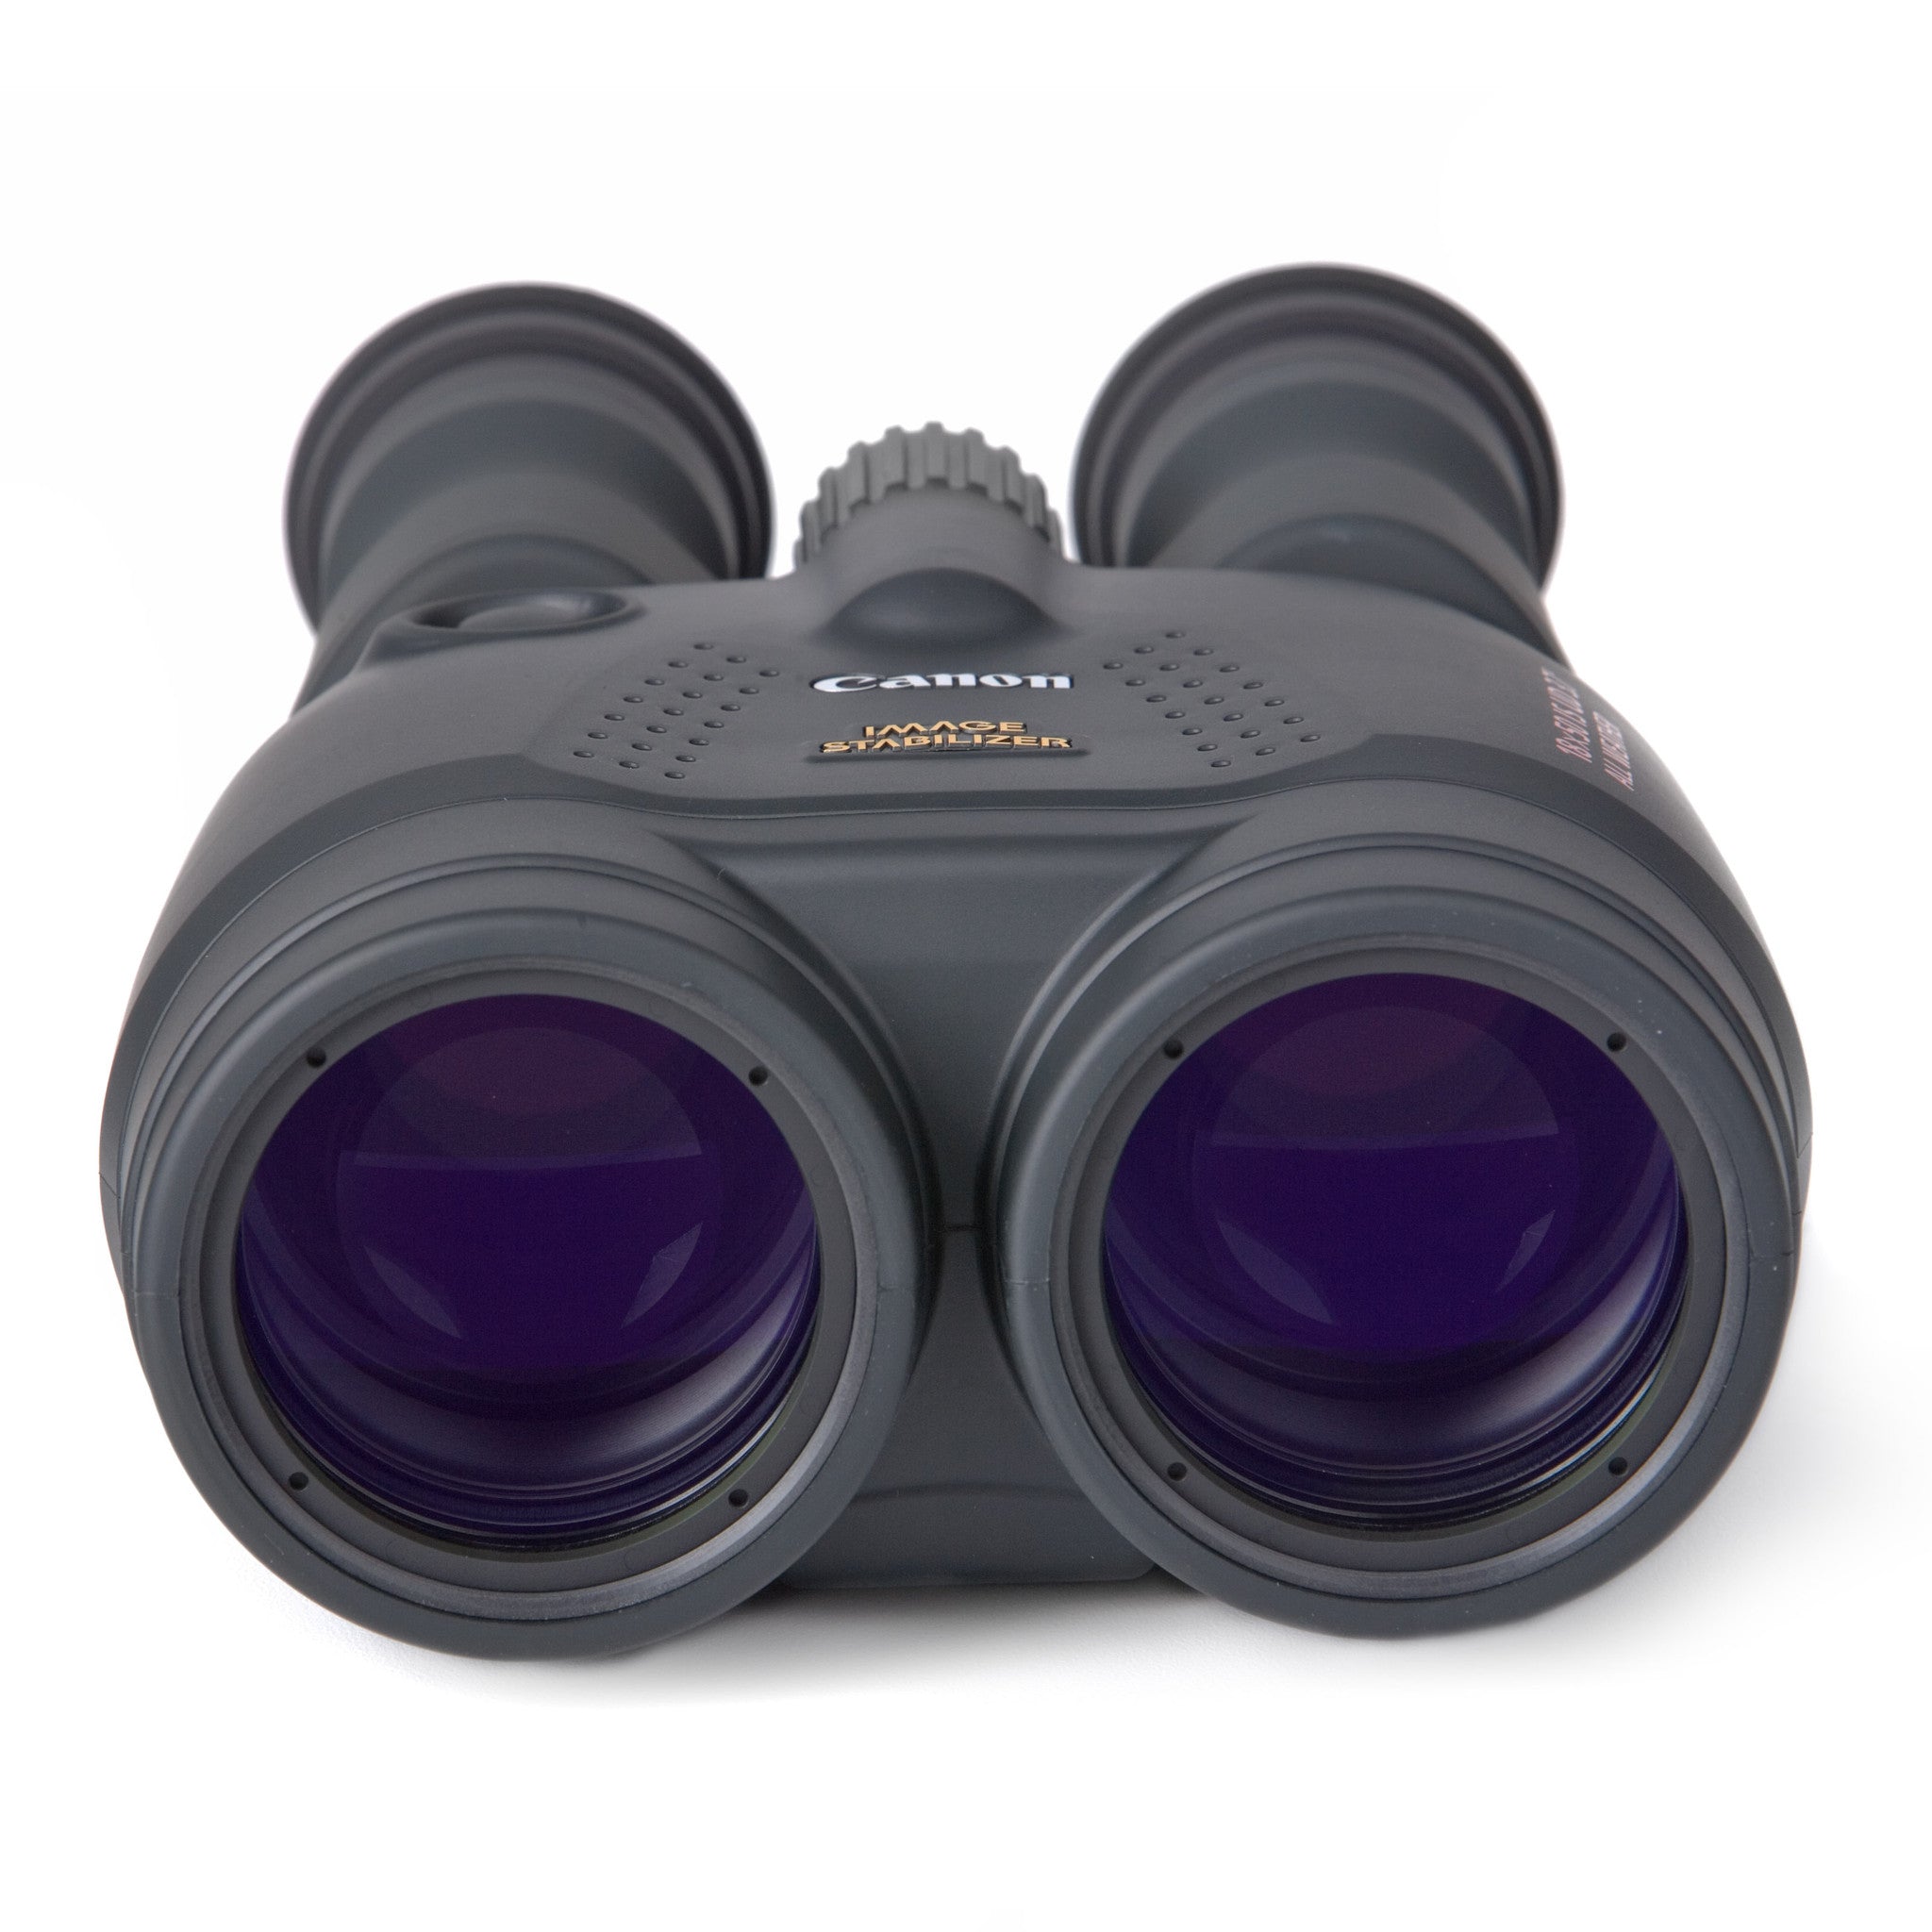 canon 18x50 is image stabilized binocular off 63% - naraiuran.com